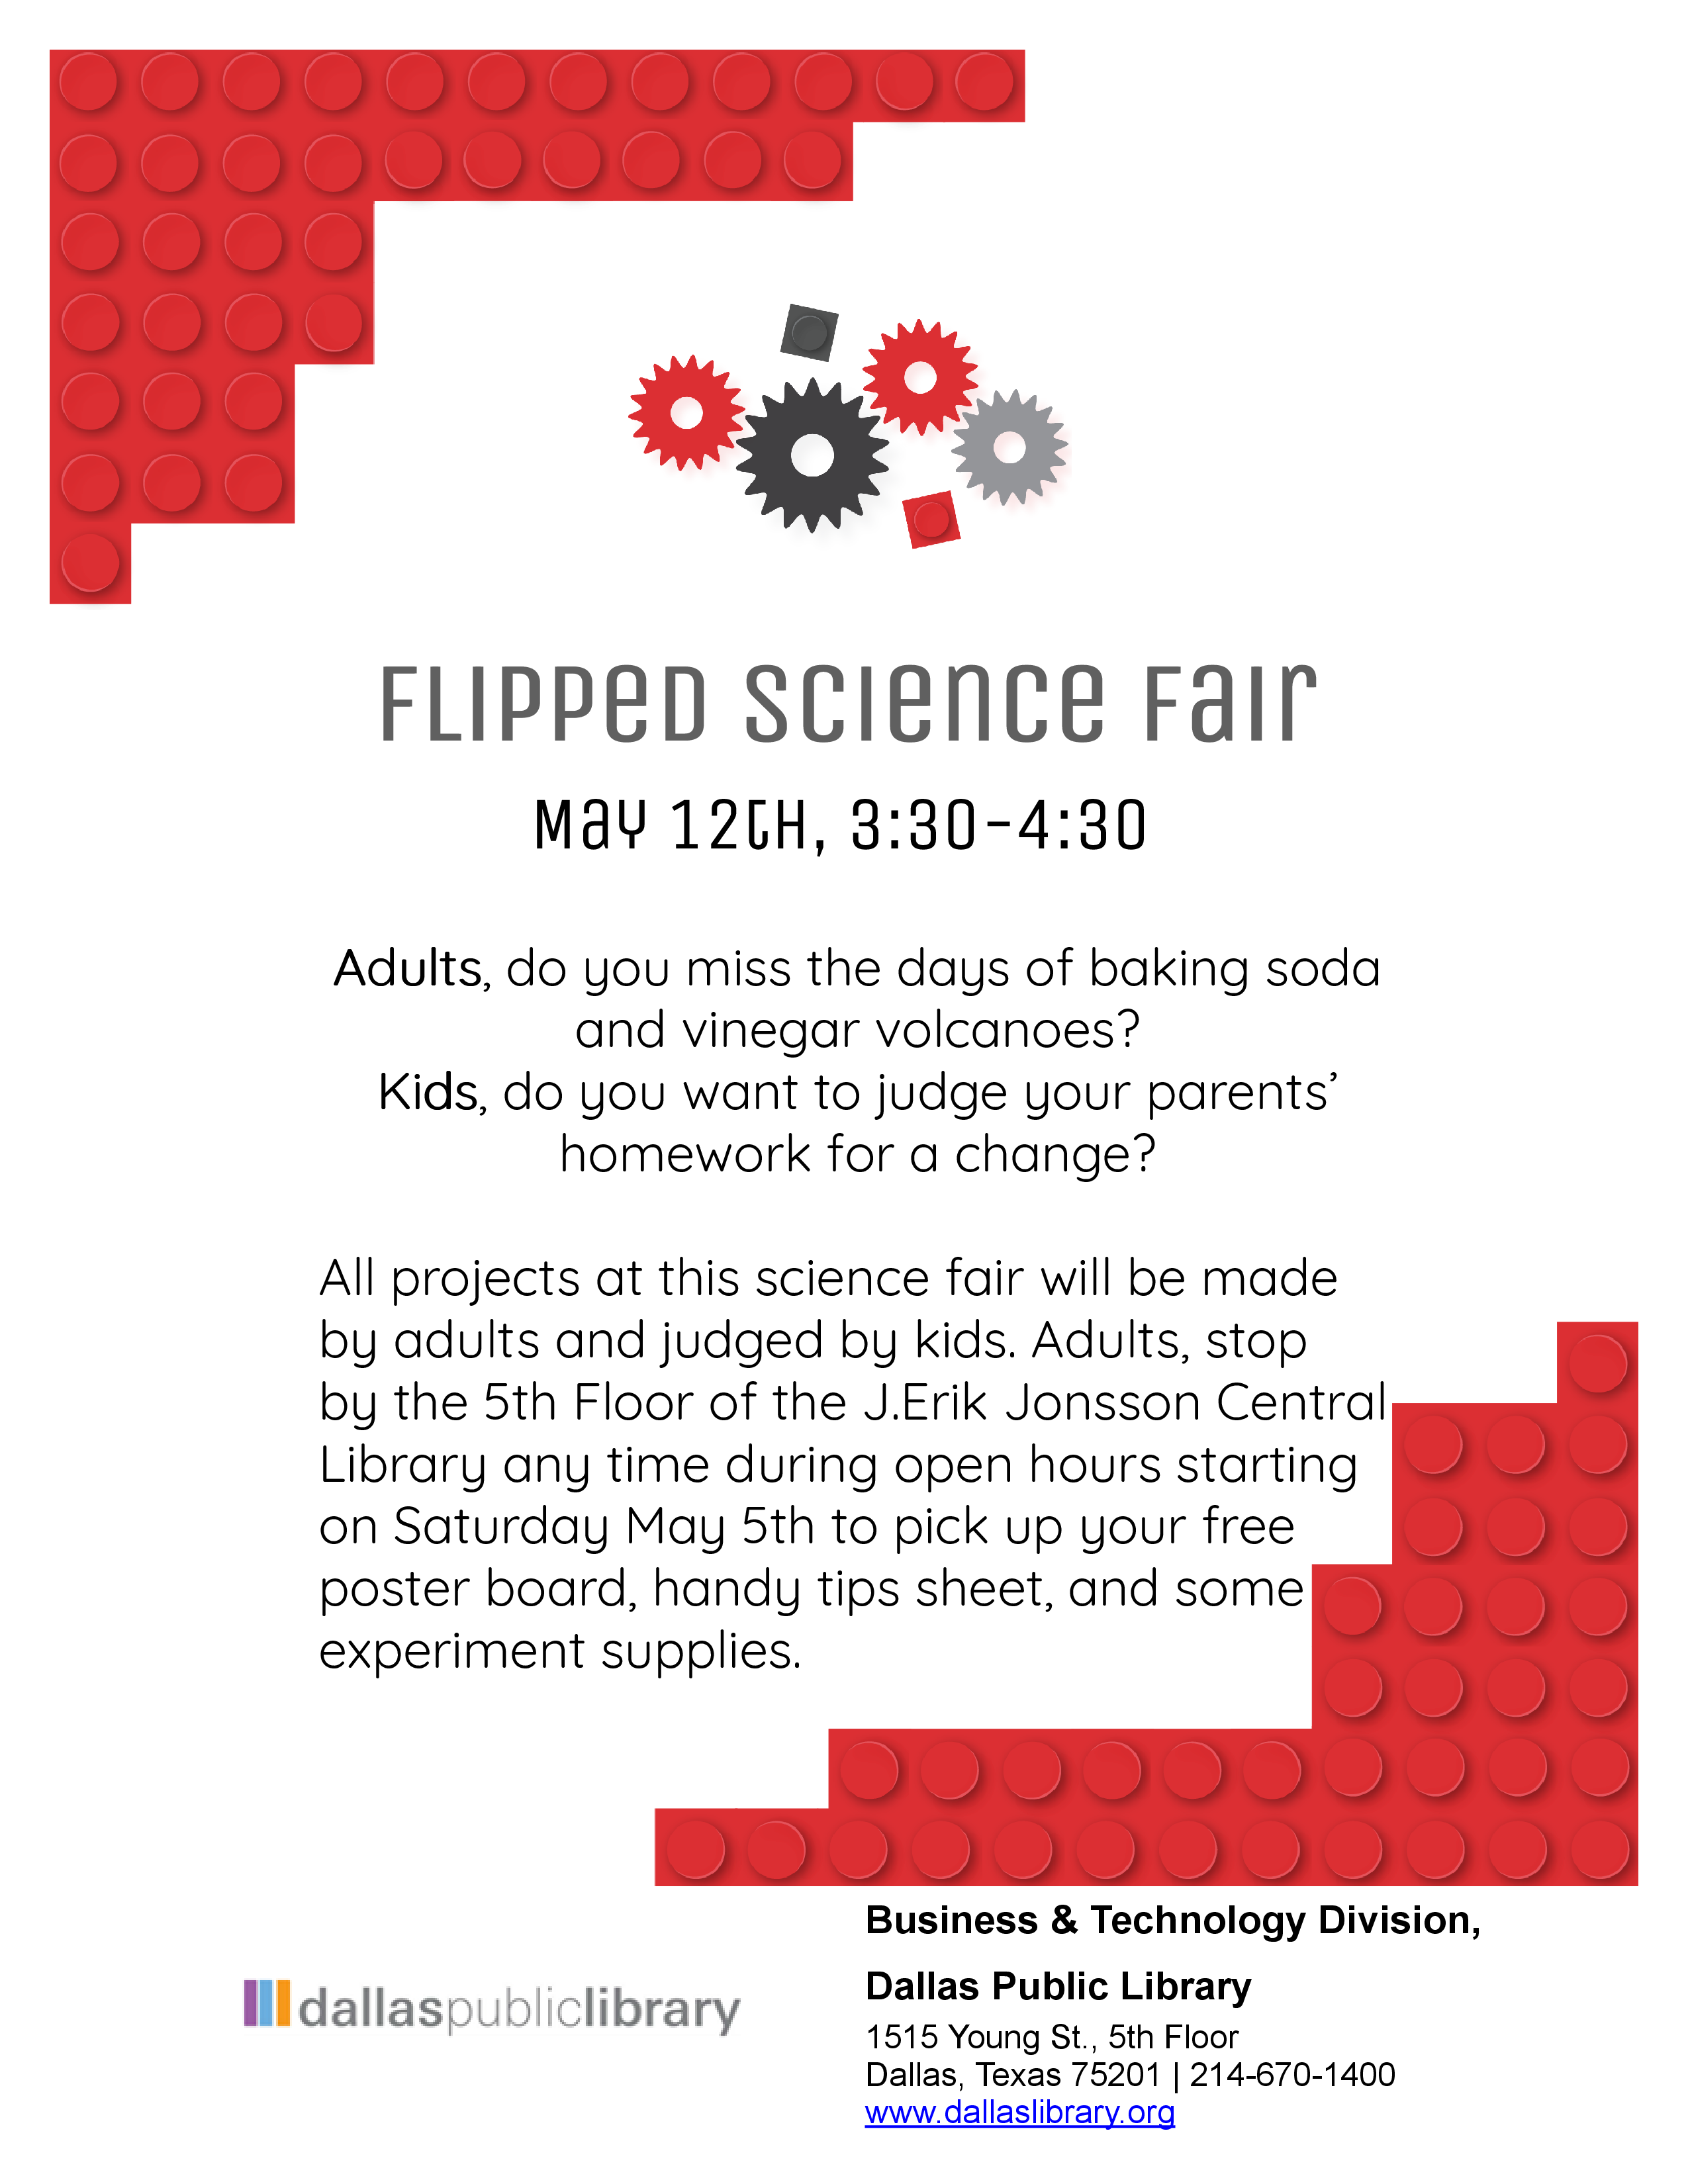 Flipped Science Fair flyer